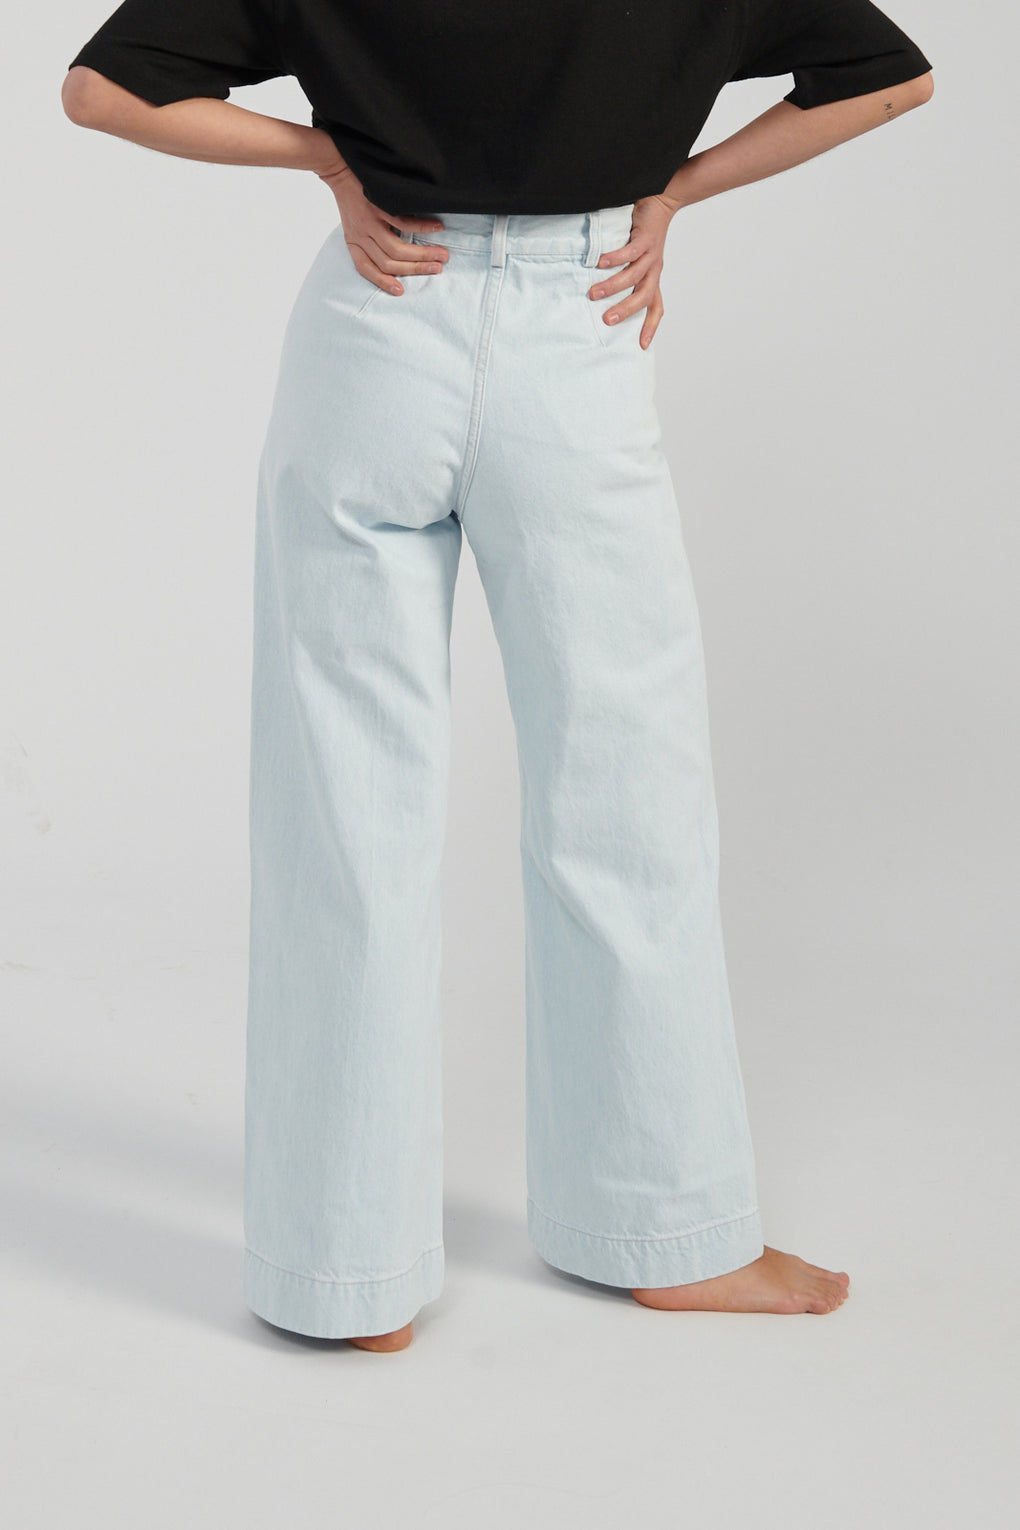 Vintage Pants  High Waisted, Jeans, Sailor Pants